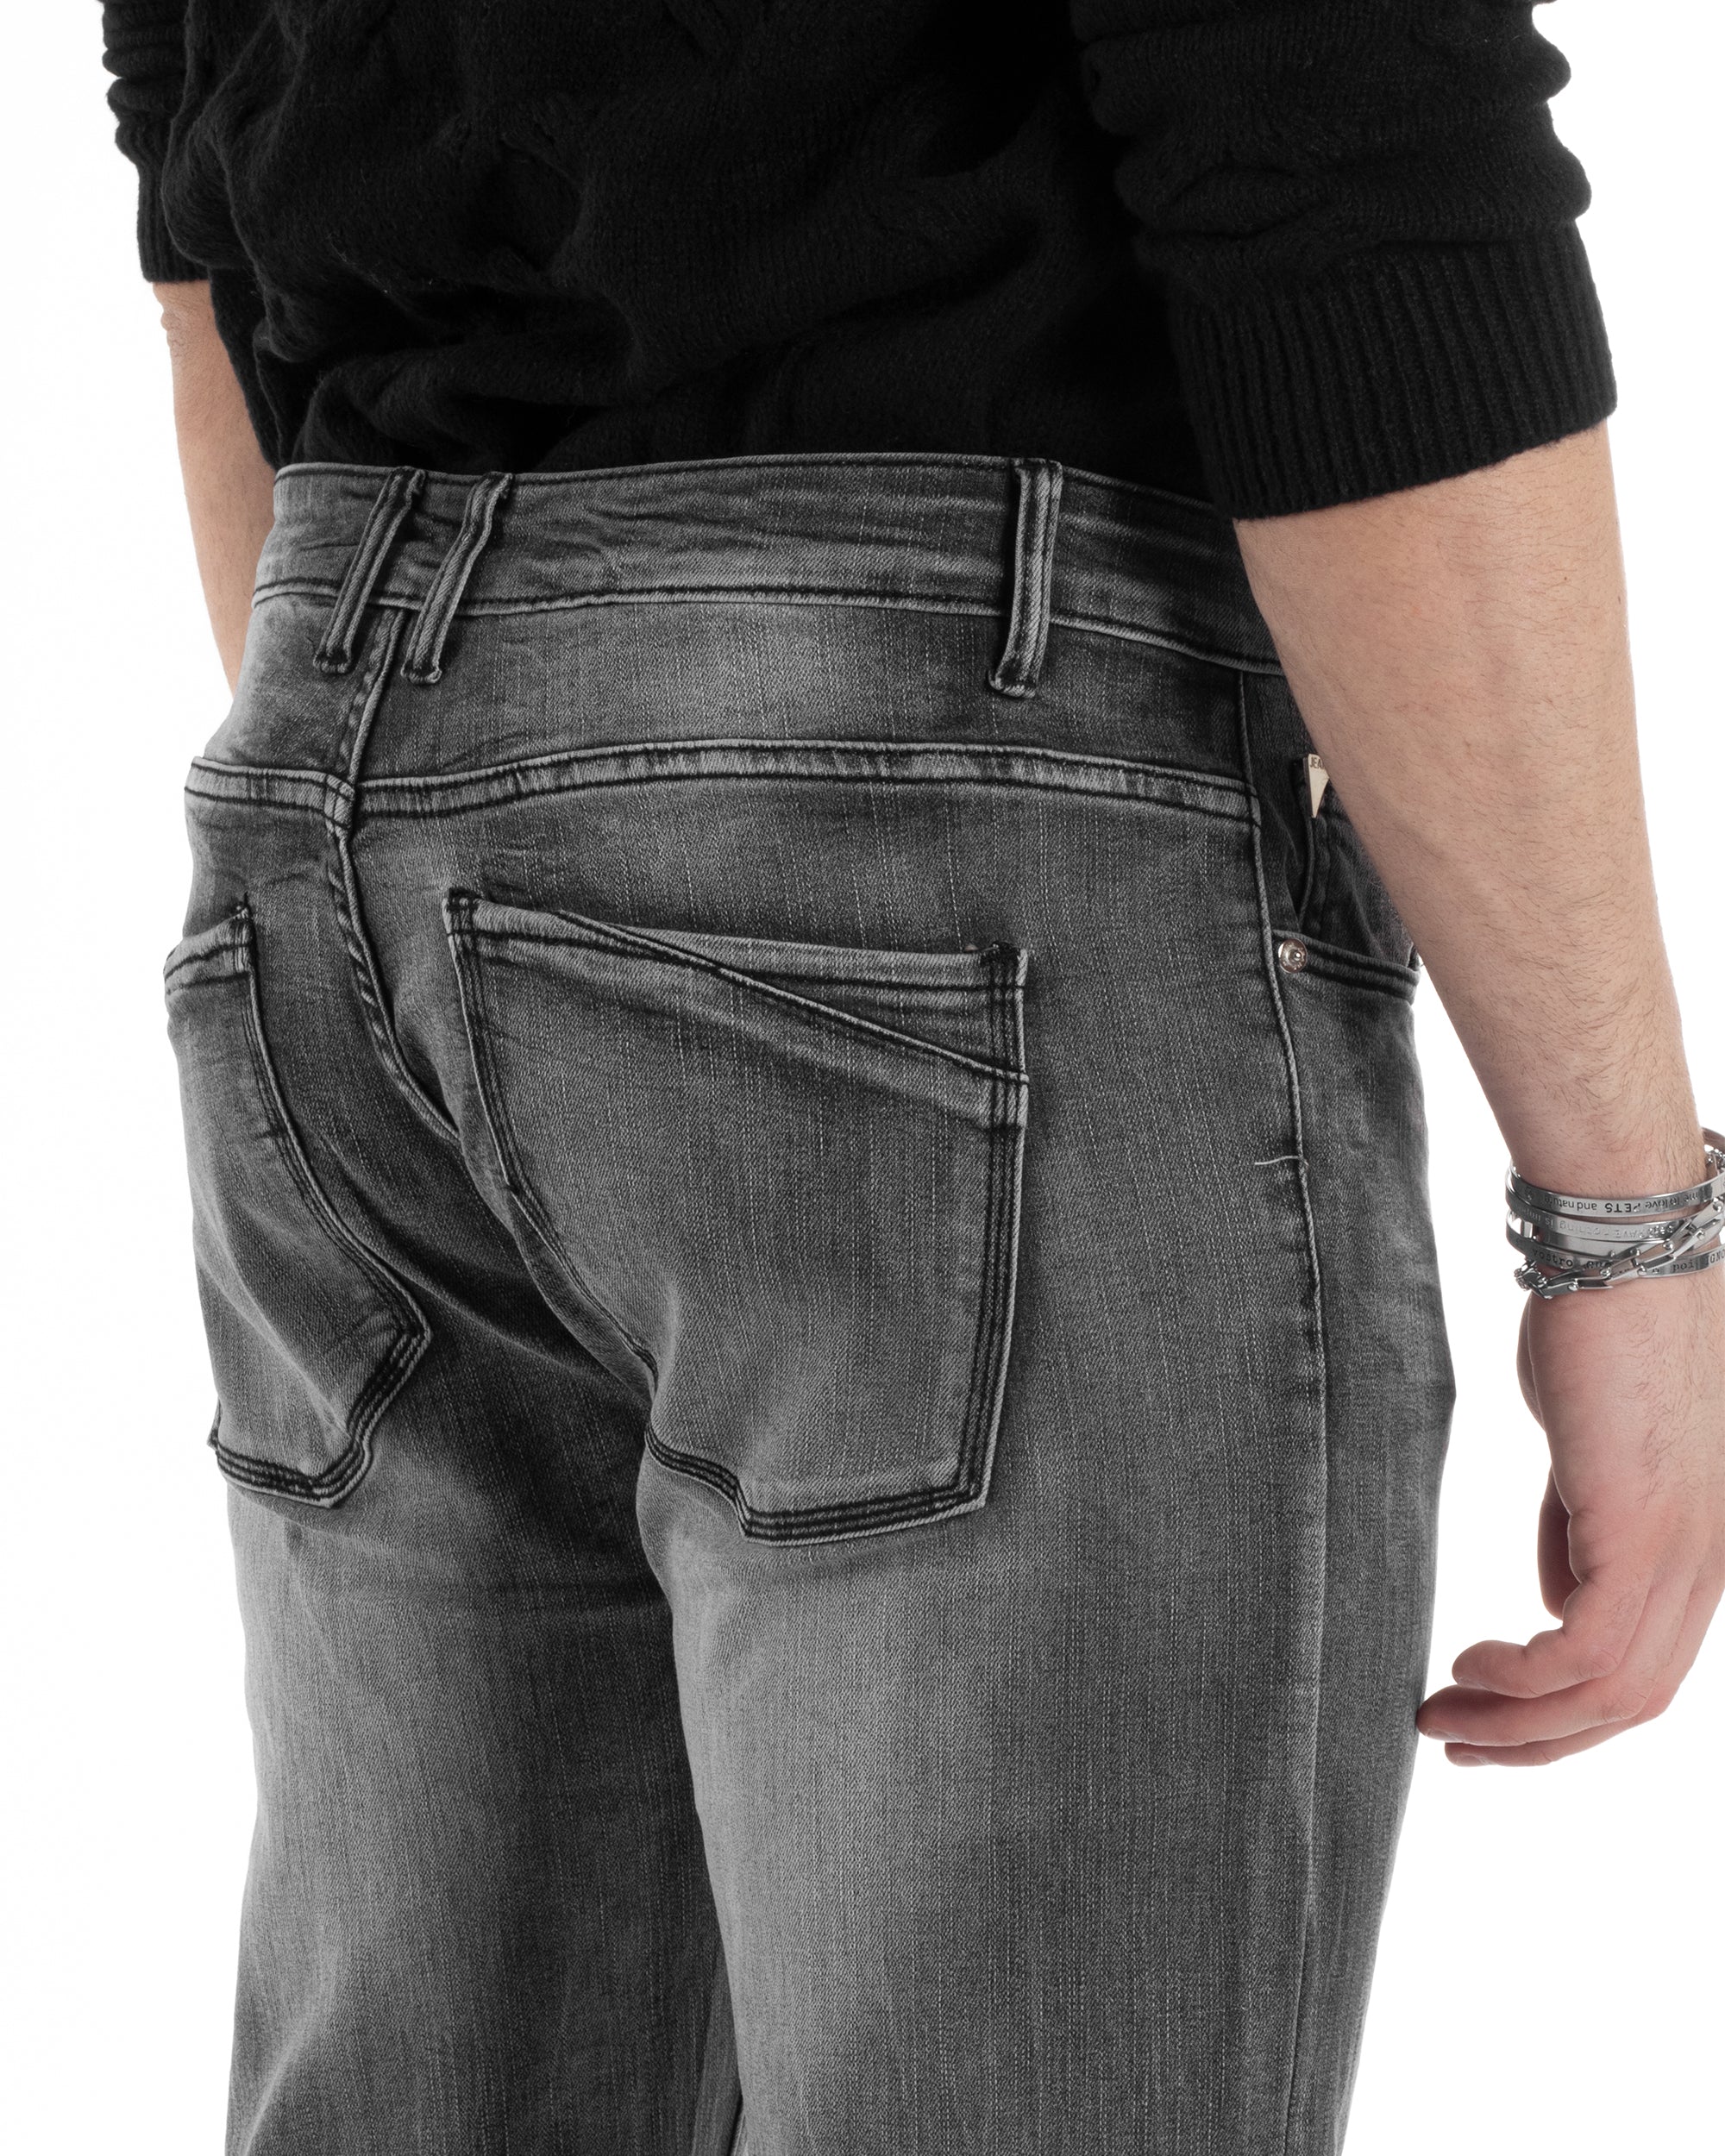 Pantaloni Uomo Jeans Cinque Tasche Slim Fit Basic Grigio Denim Stone Washed GIOSAL-JS1005A